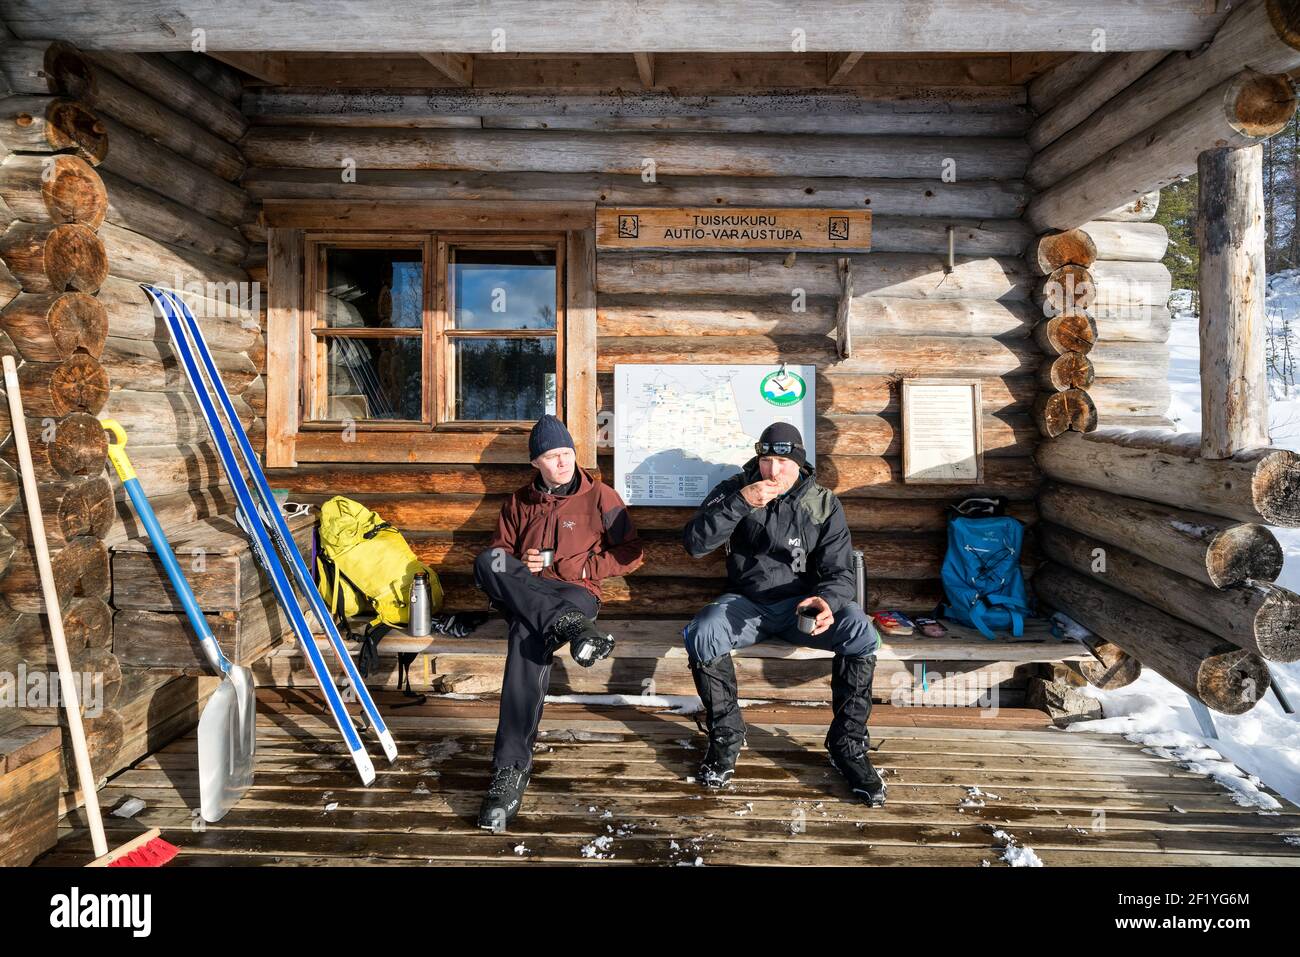 Having a break at Tuiskukuru open wilderness hut while ski touring in Urho Kekkonen National Park, Sodankylä, Lapland, Finland Stock Photo